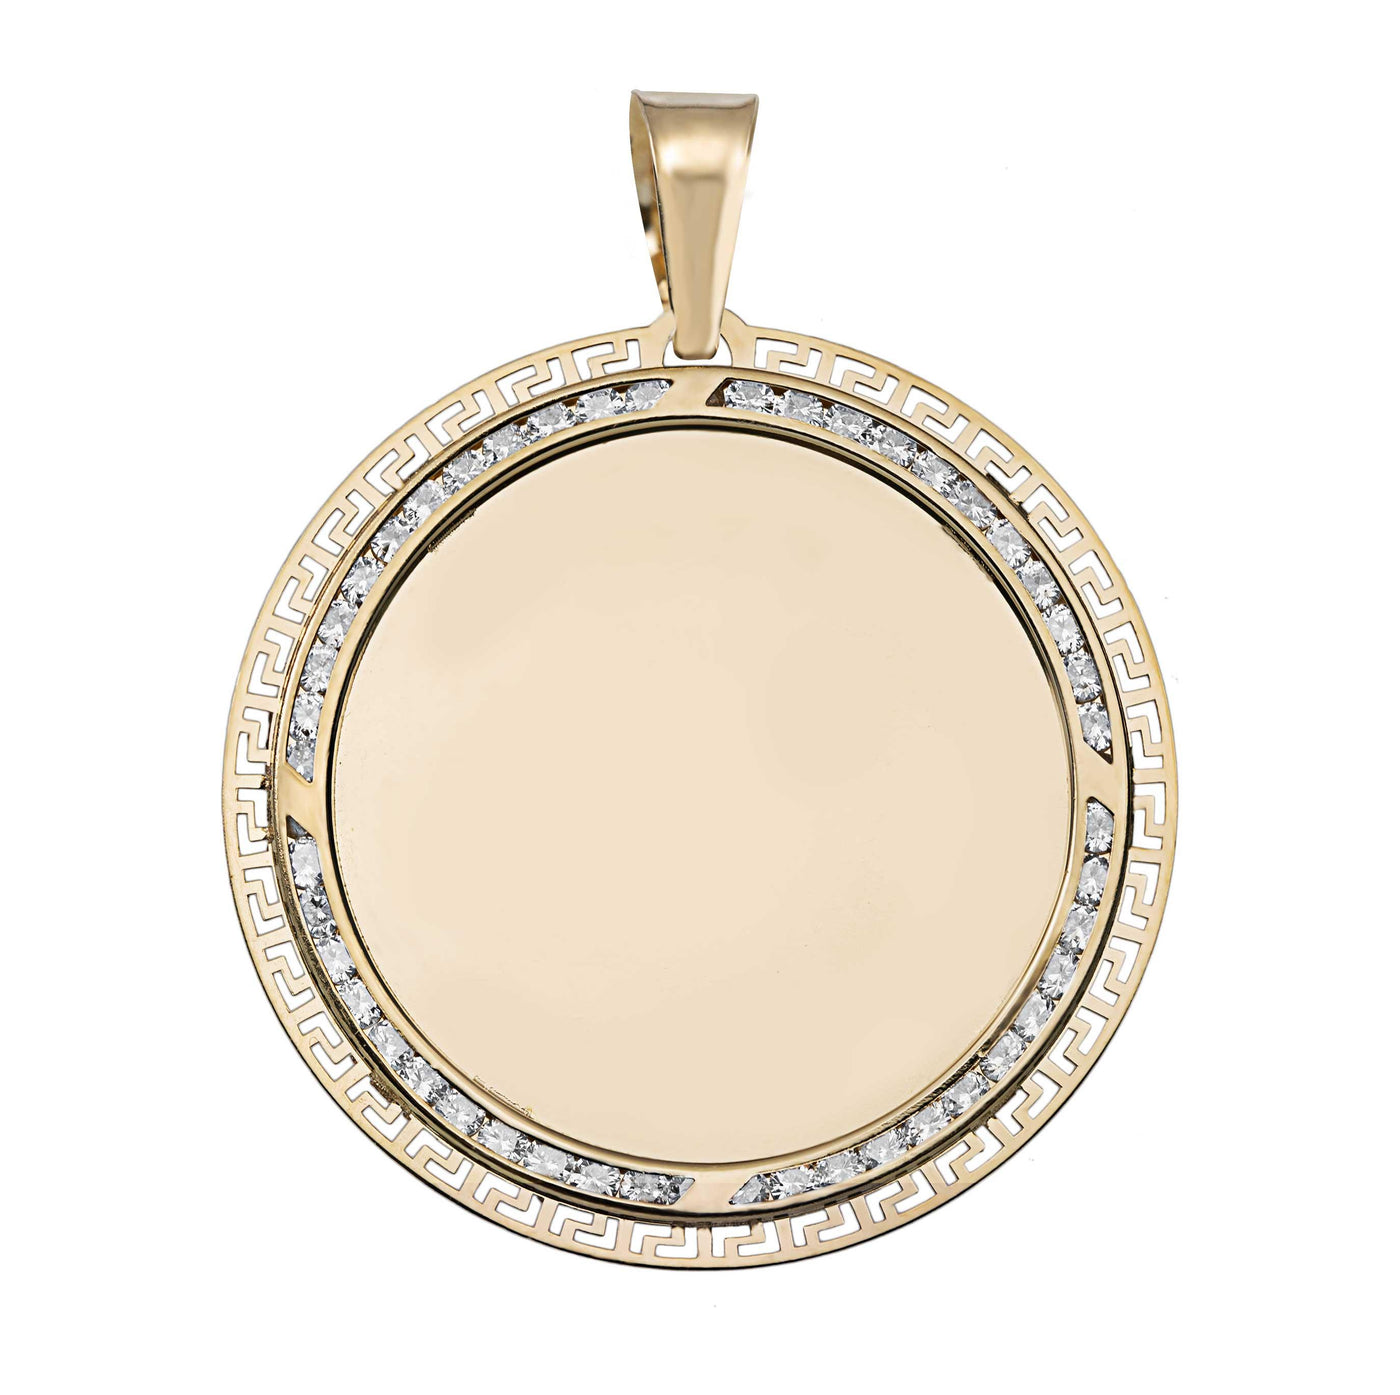 Greek Key CZ Picture Frame Memory Medallion Pendant 10K Yellow Gold - bayamjewelry